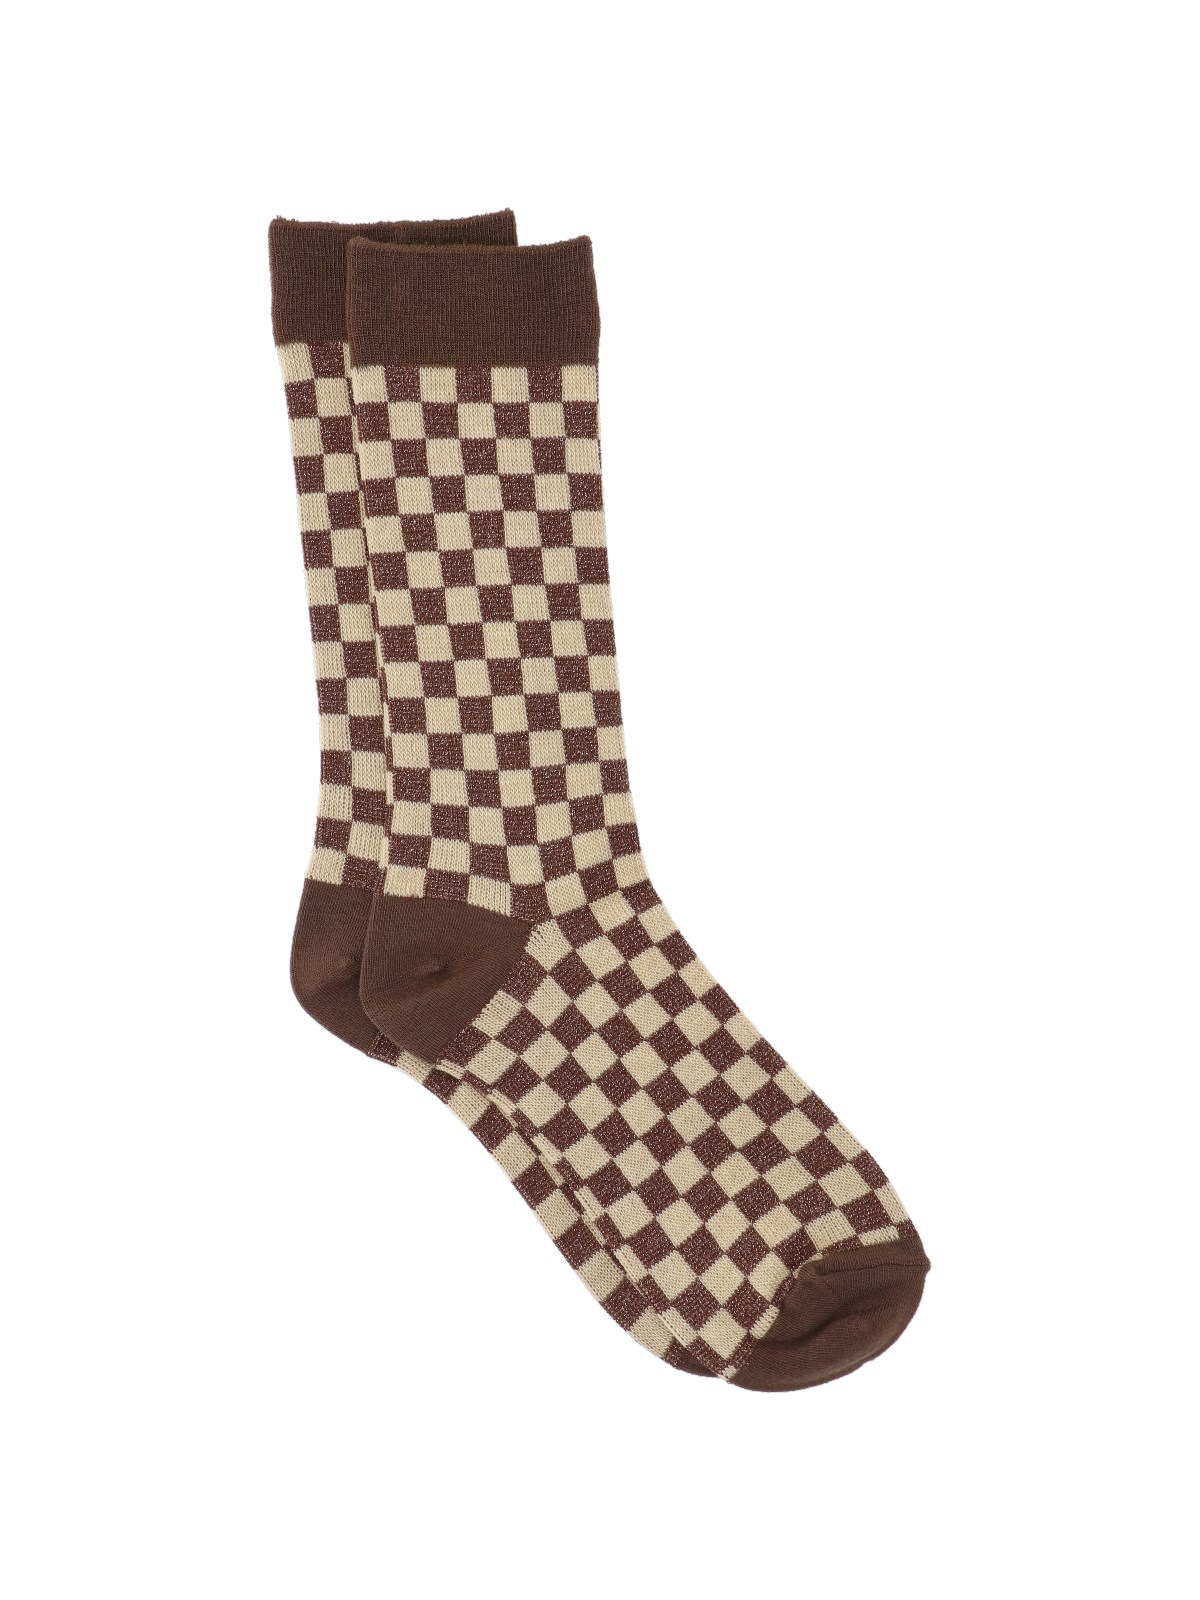 Undercover 'checkerboard' Socks In Brown